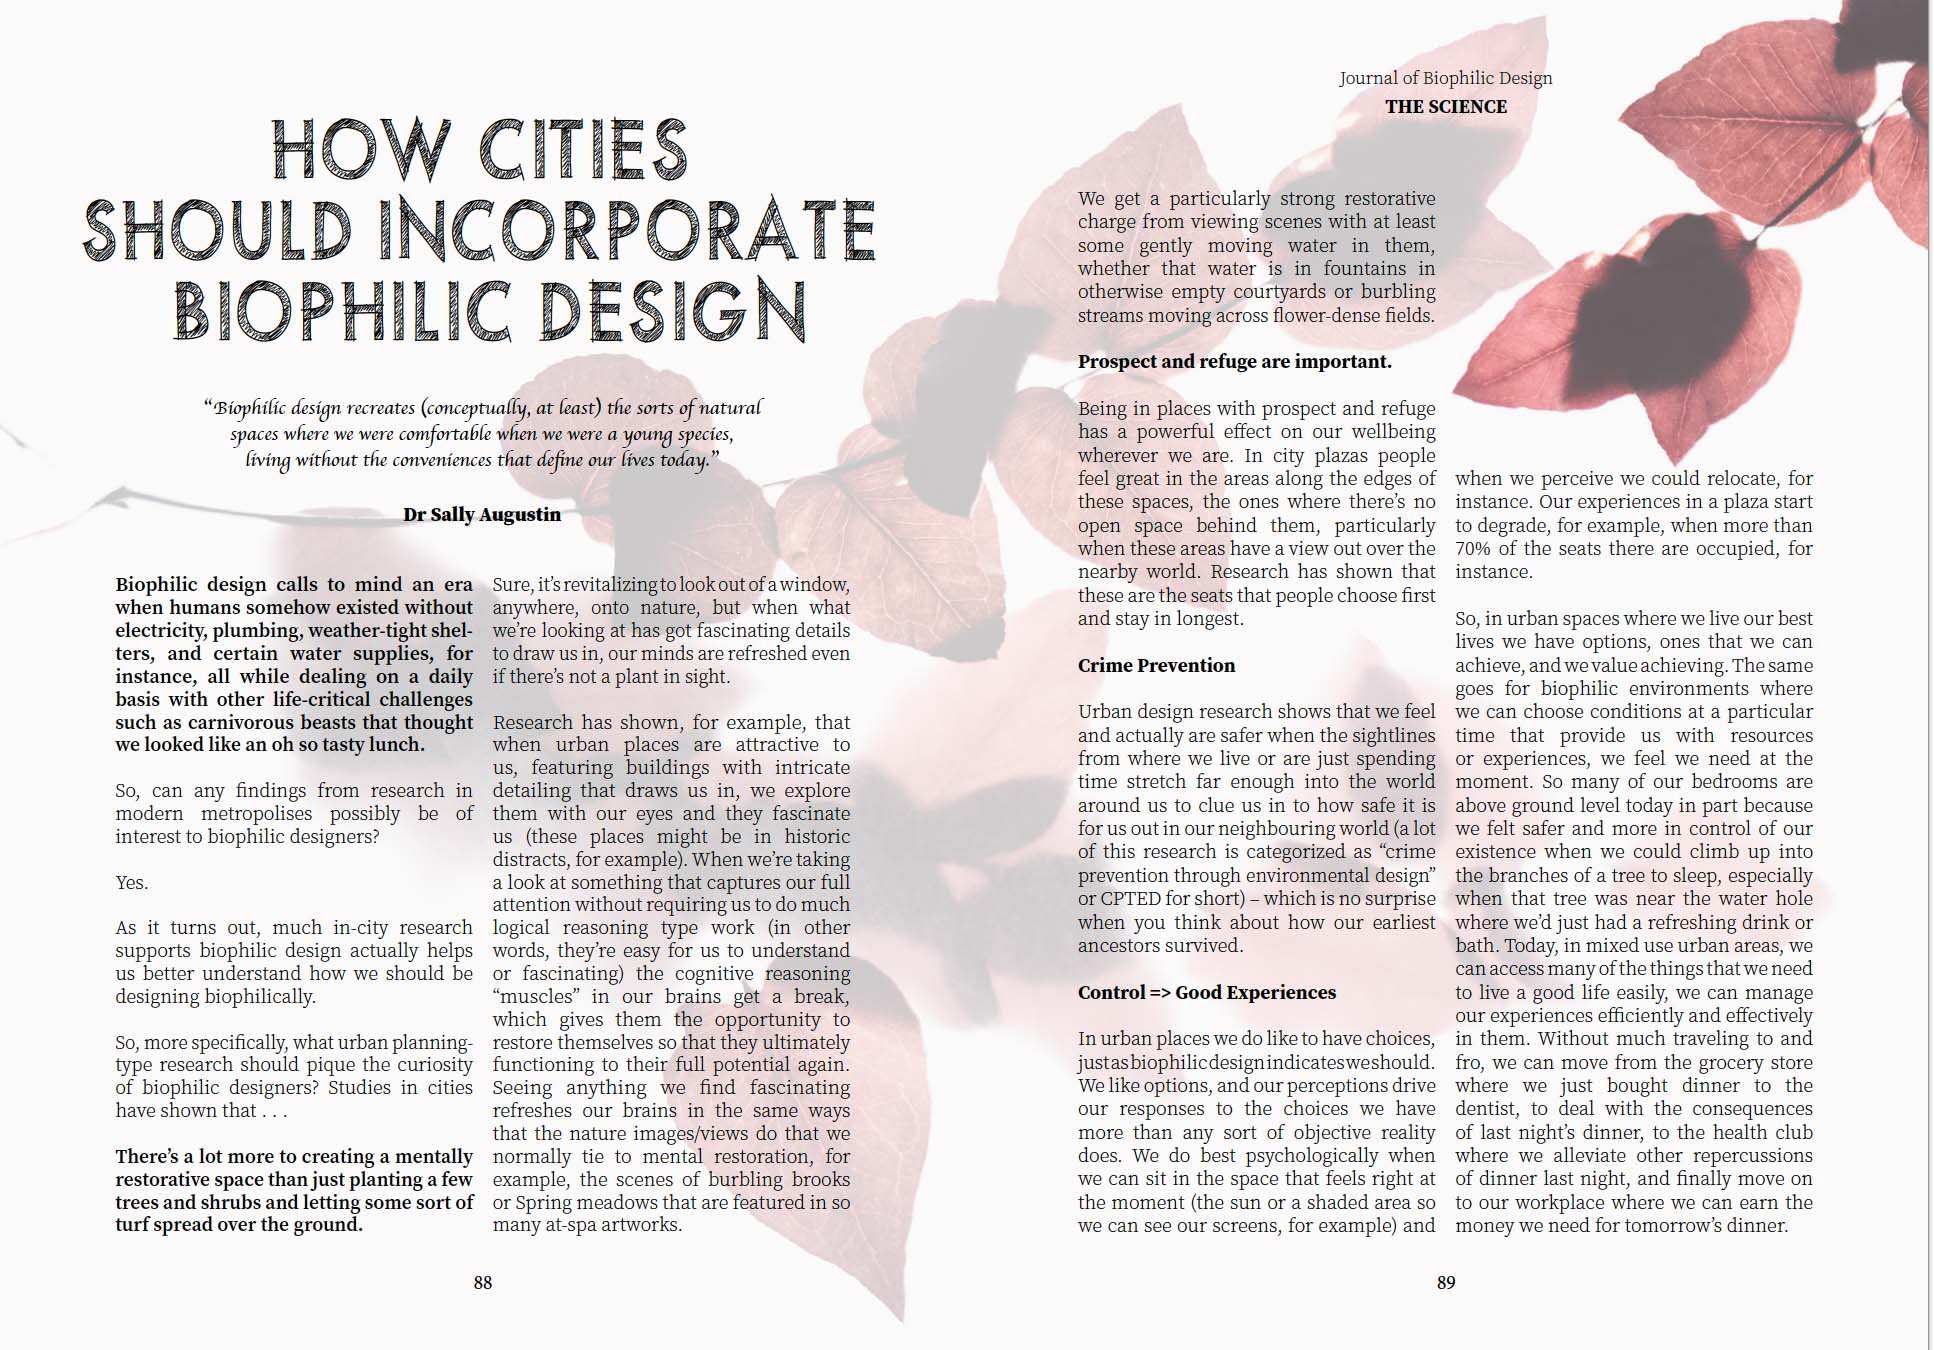 Journal of Biophilic Design Issue 4 Cities-10.jpg